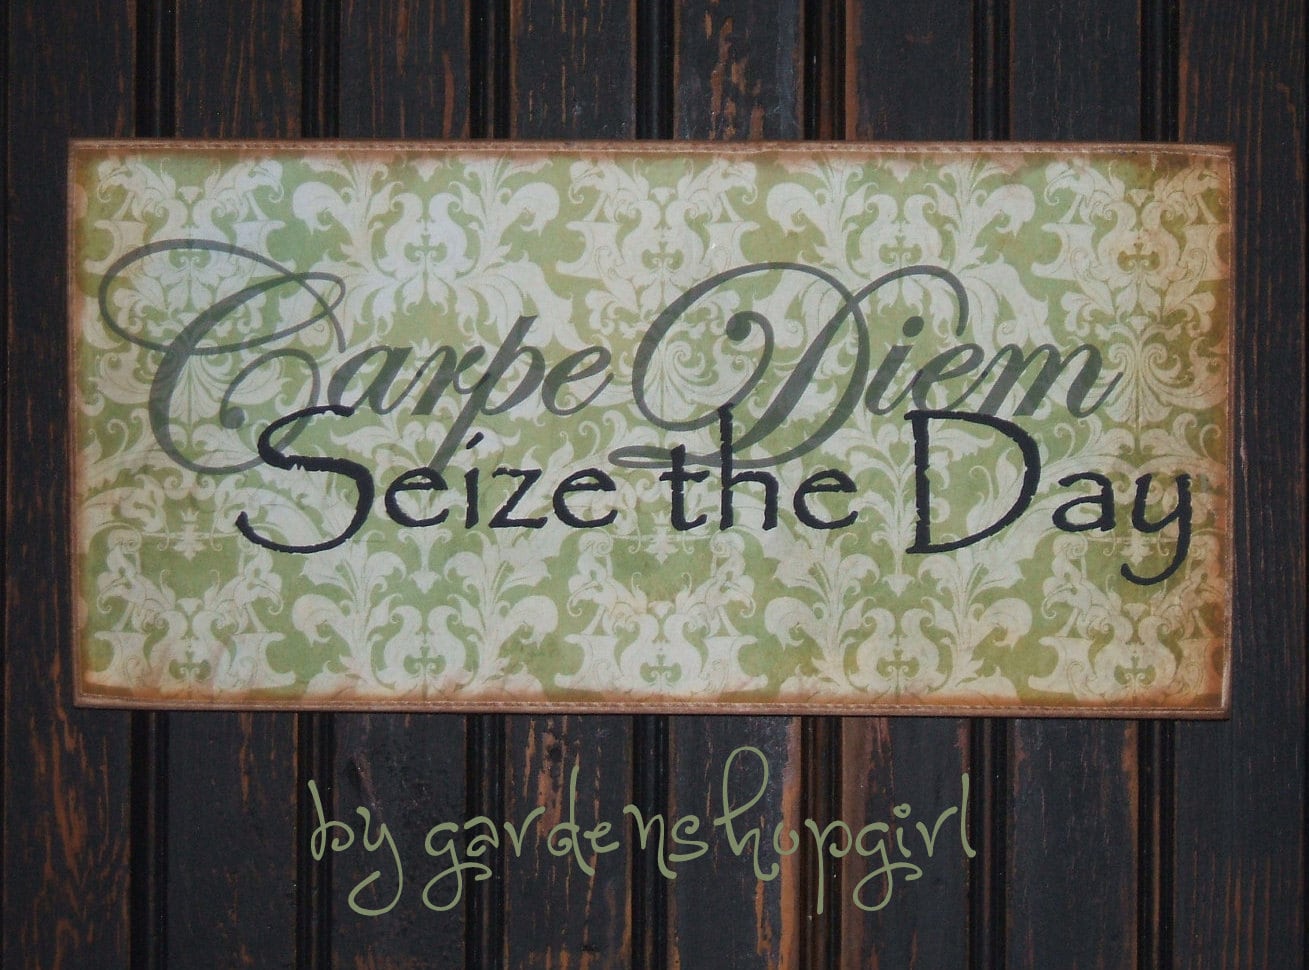 seize the day carpe diem